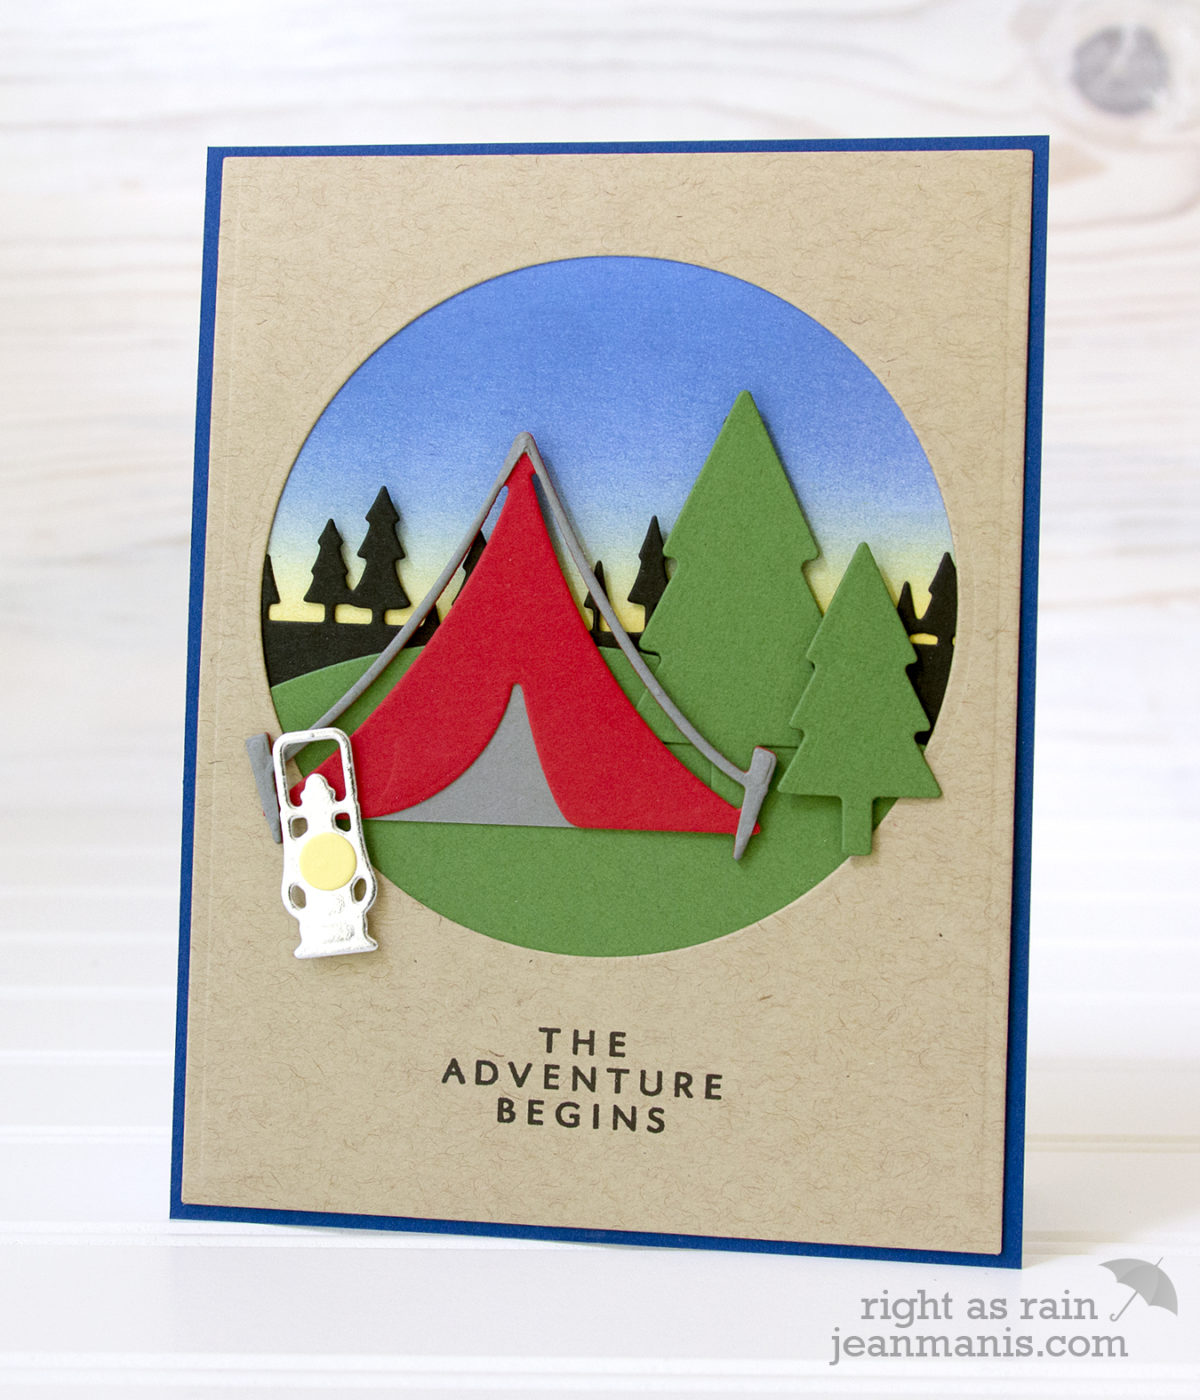 The Adventure Begins – a Die-Cut Camping Scene